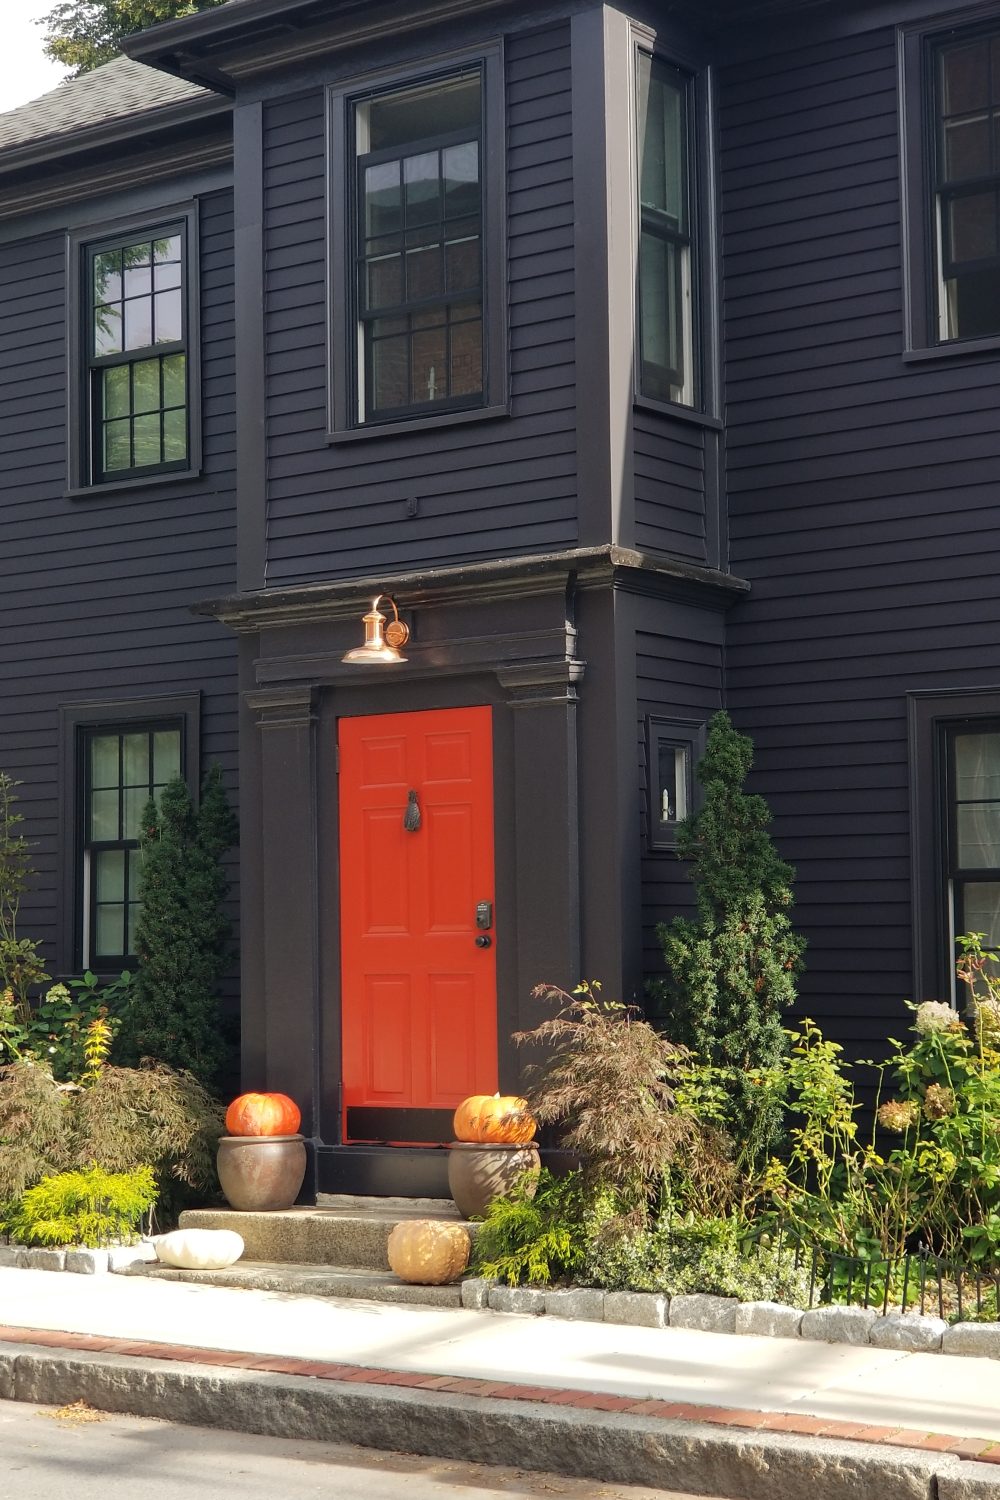 Black house with an orange door in Salem, MA